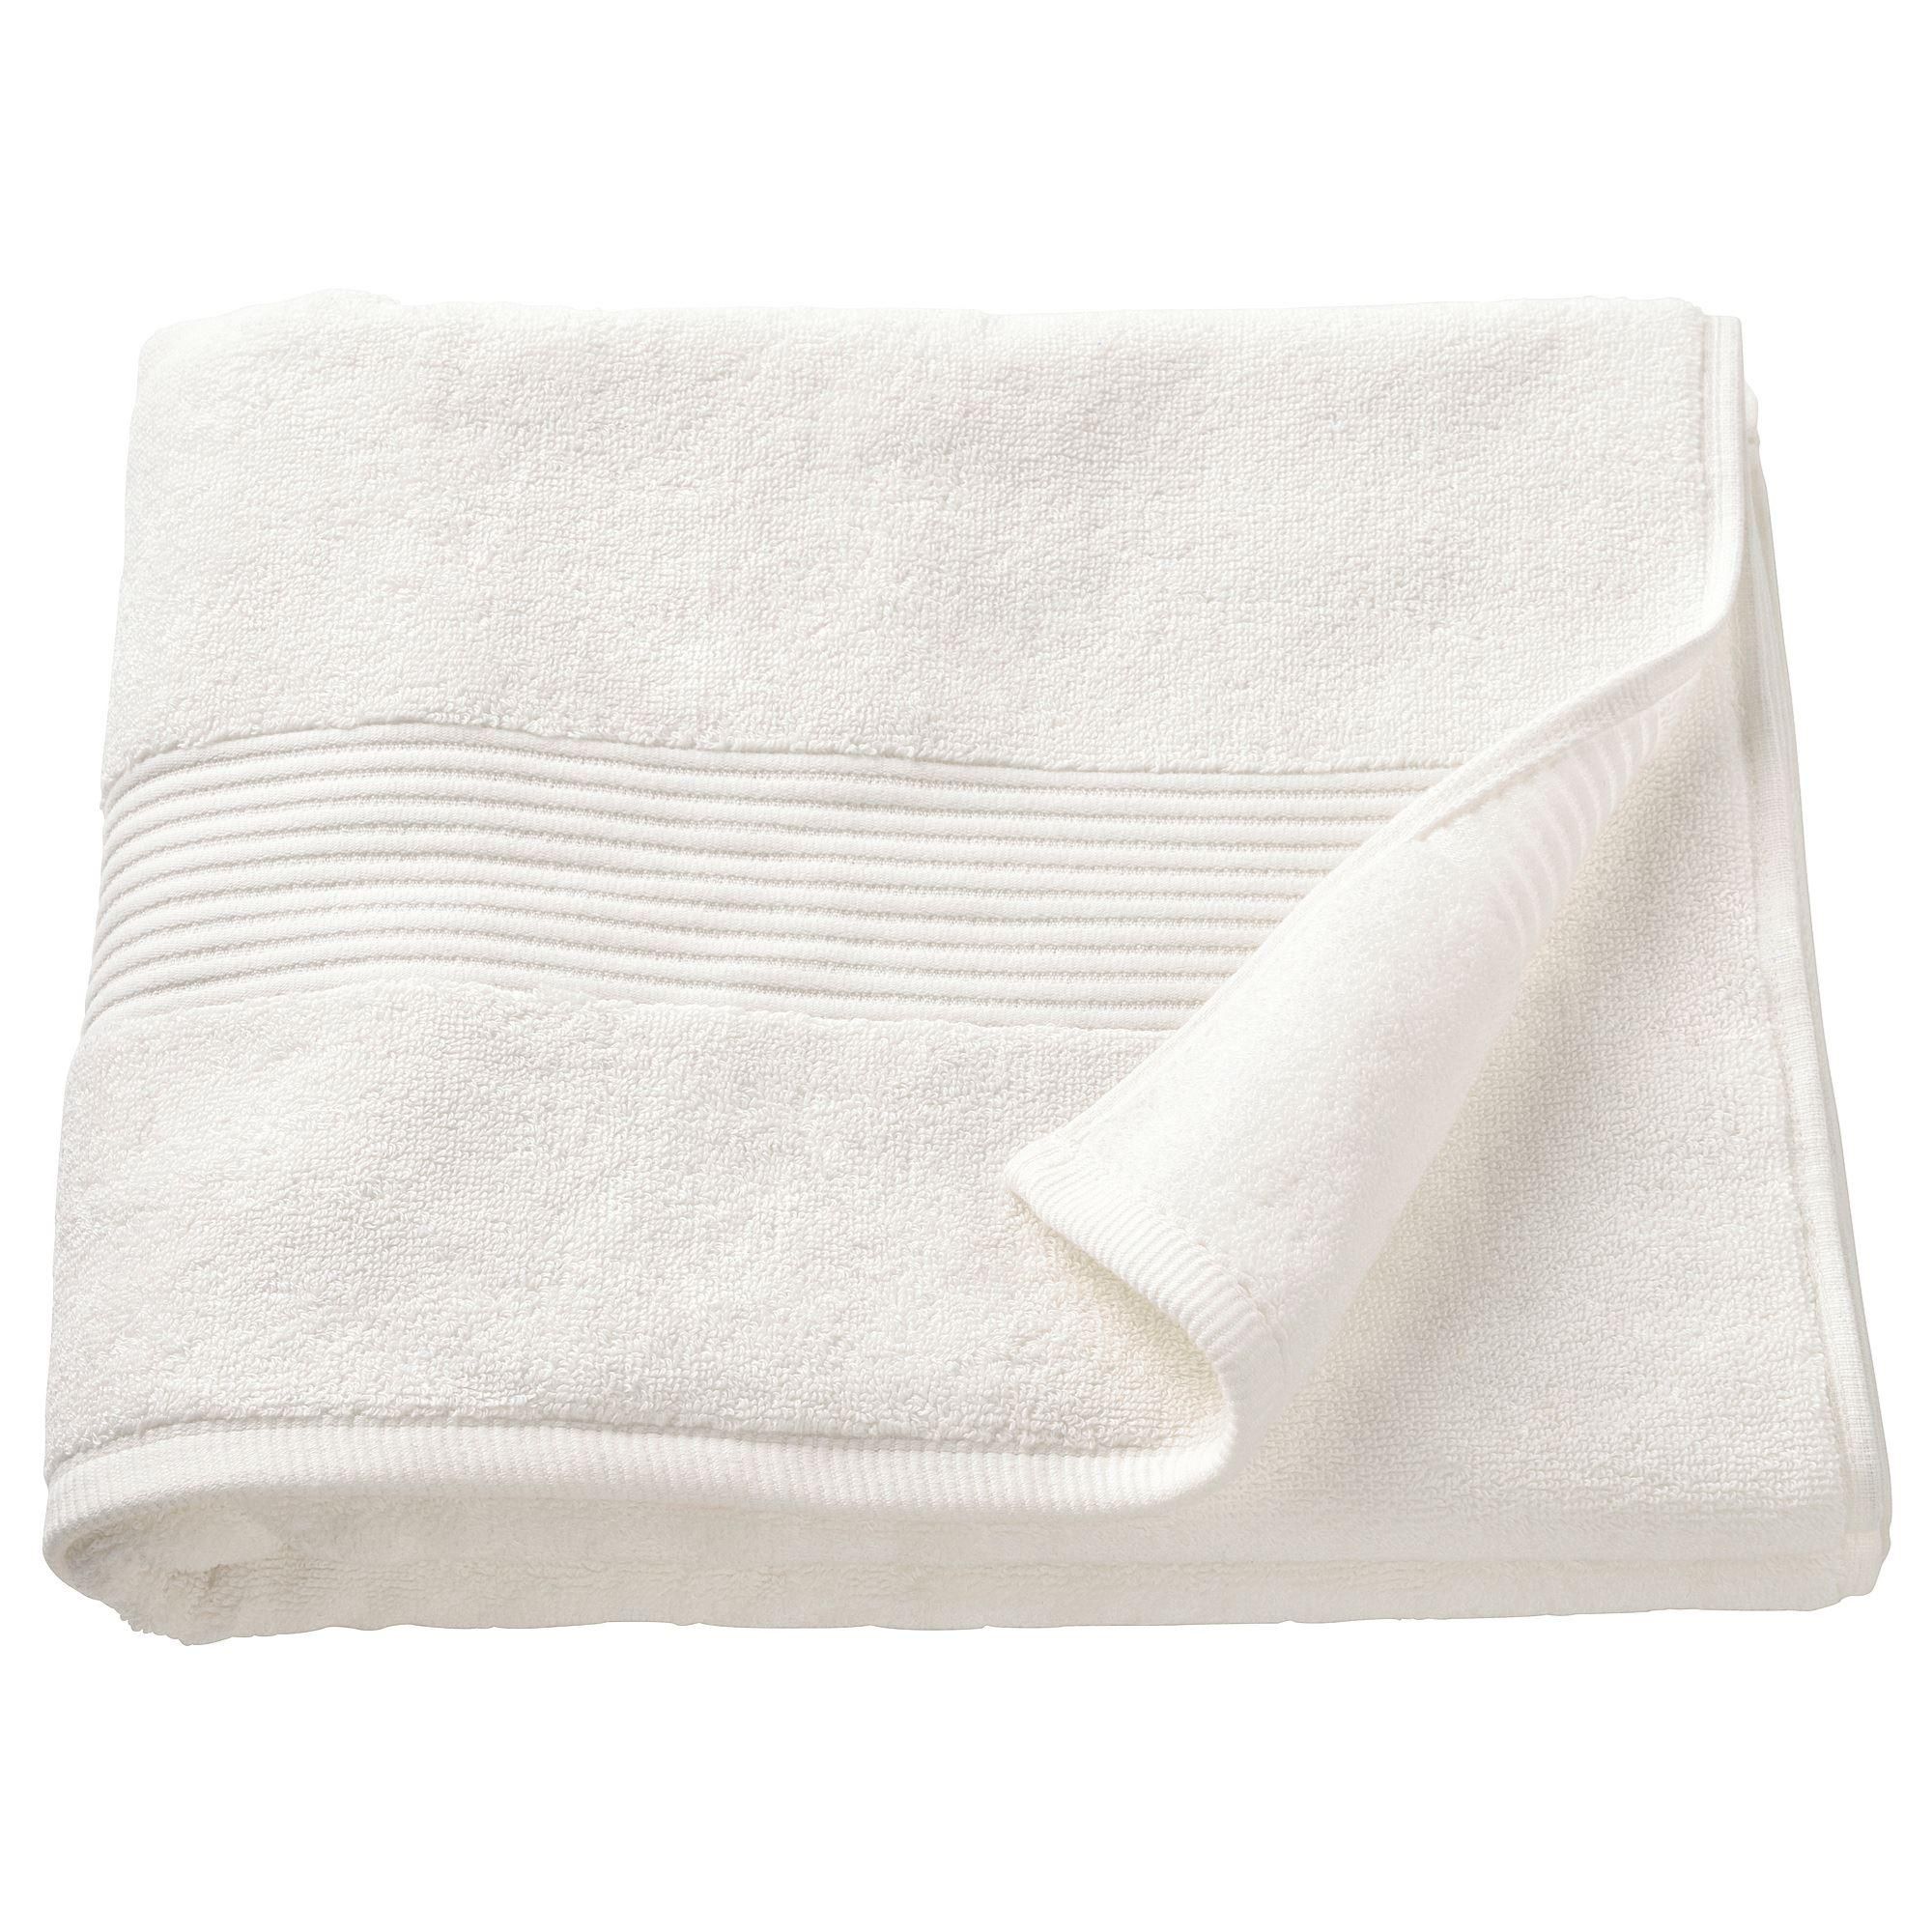 Полотенце икеа купить. Полотенце икеа банное. Икеа белое банное полотенце. Ikea White Towel. Полотенце белое икеа артикул.